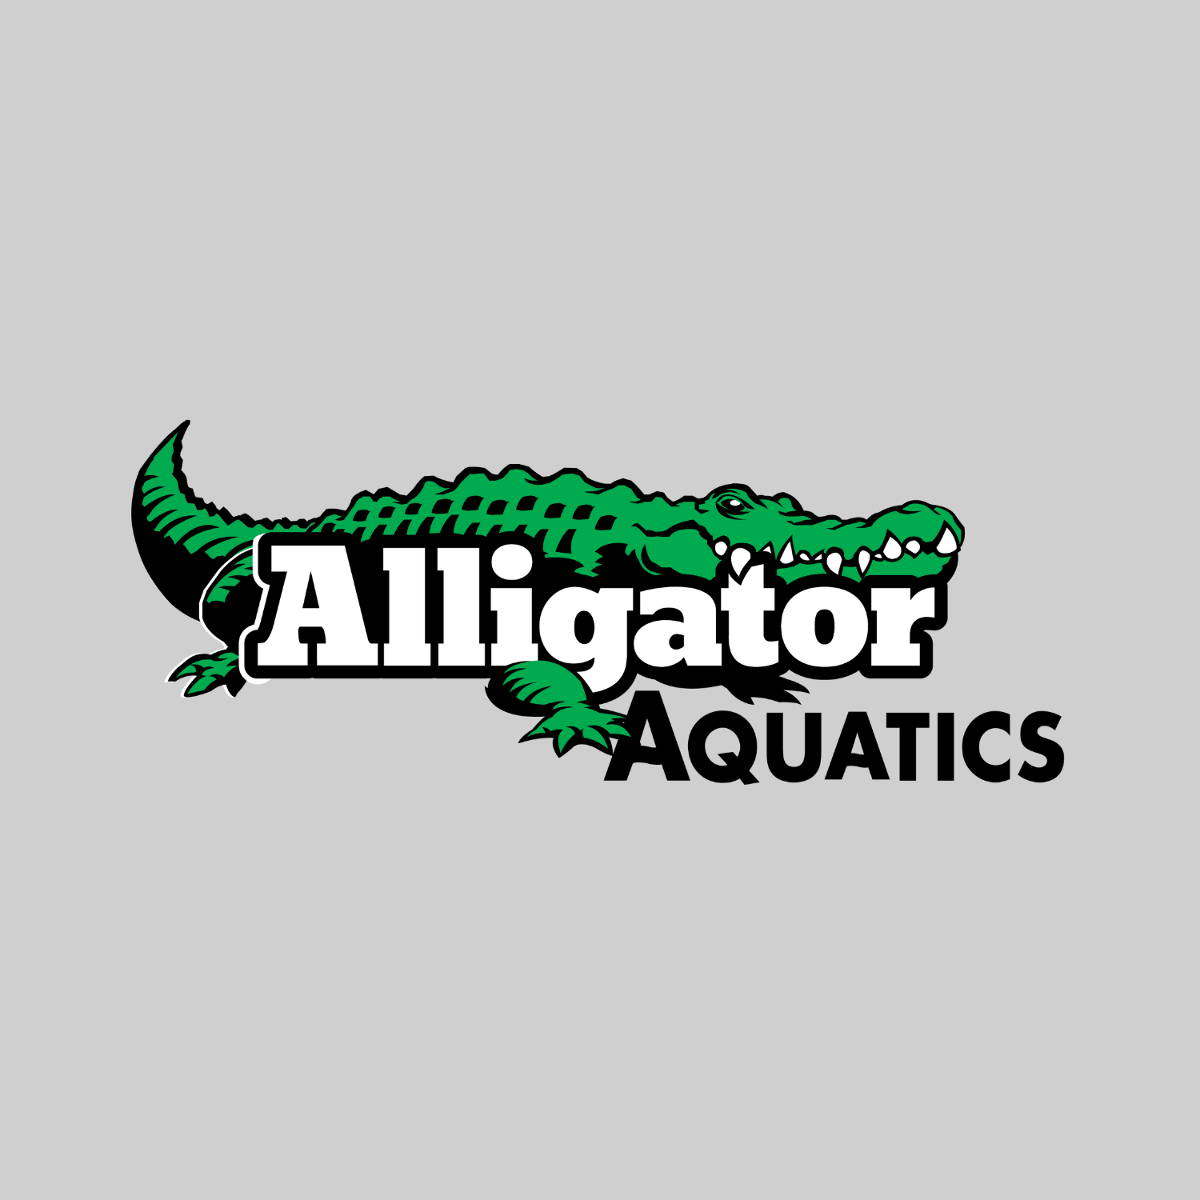 About Alligator Aquatics